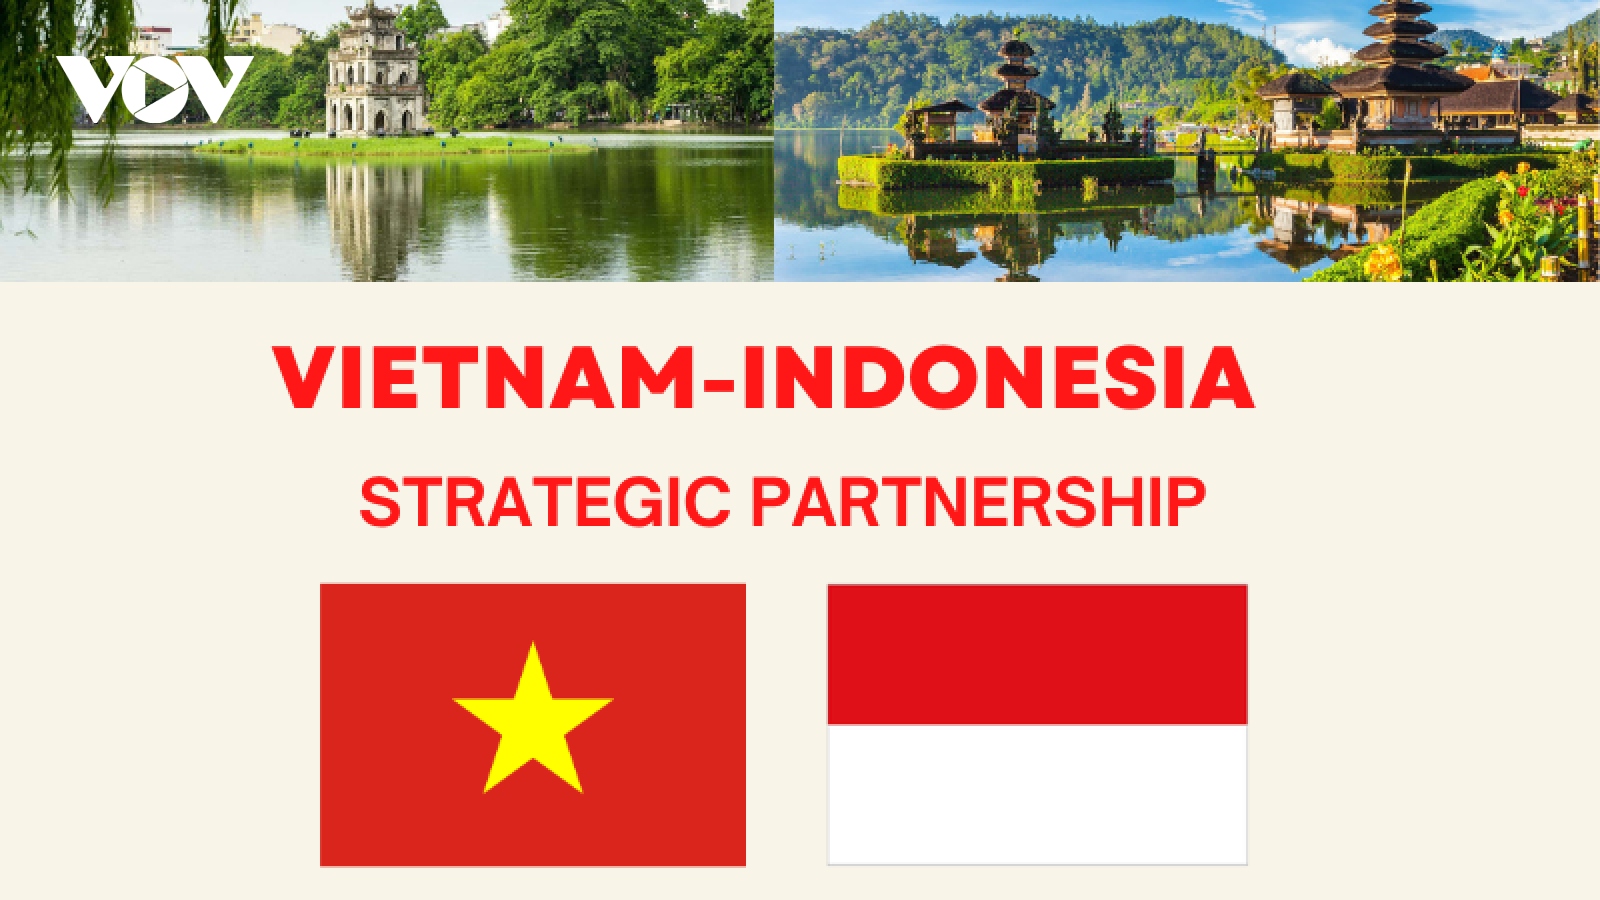 Highlights of Vietnam-Indonesia strategic partnership